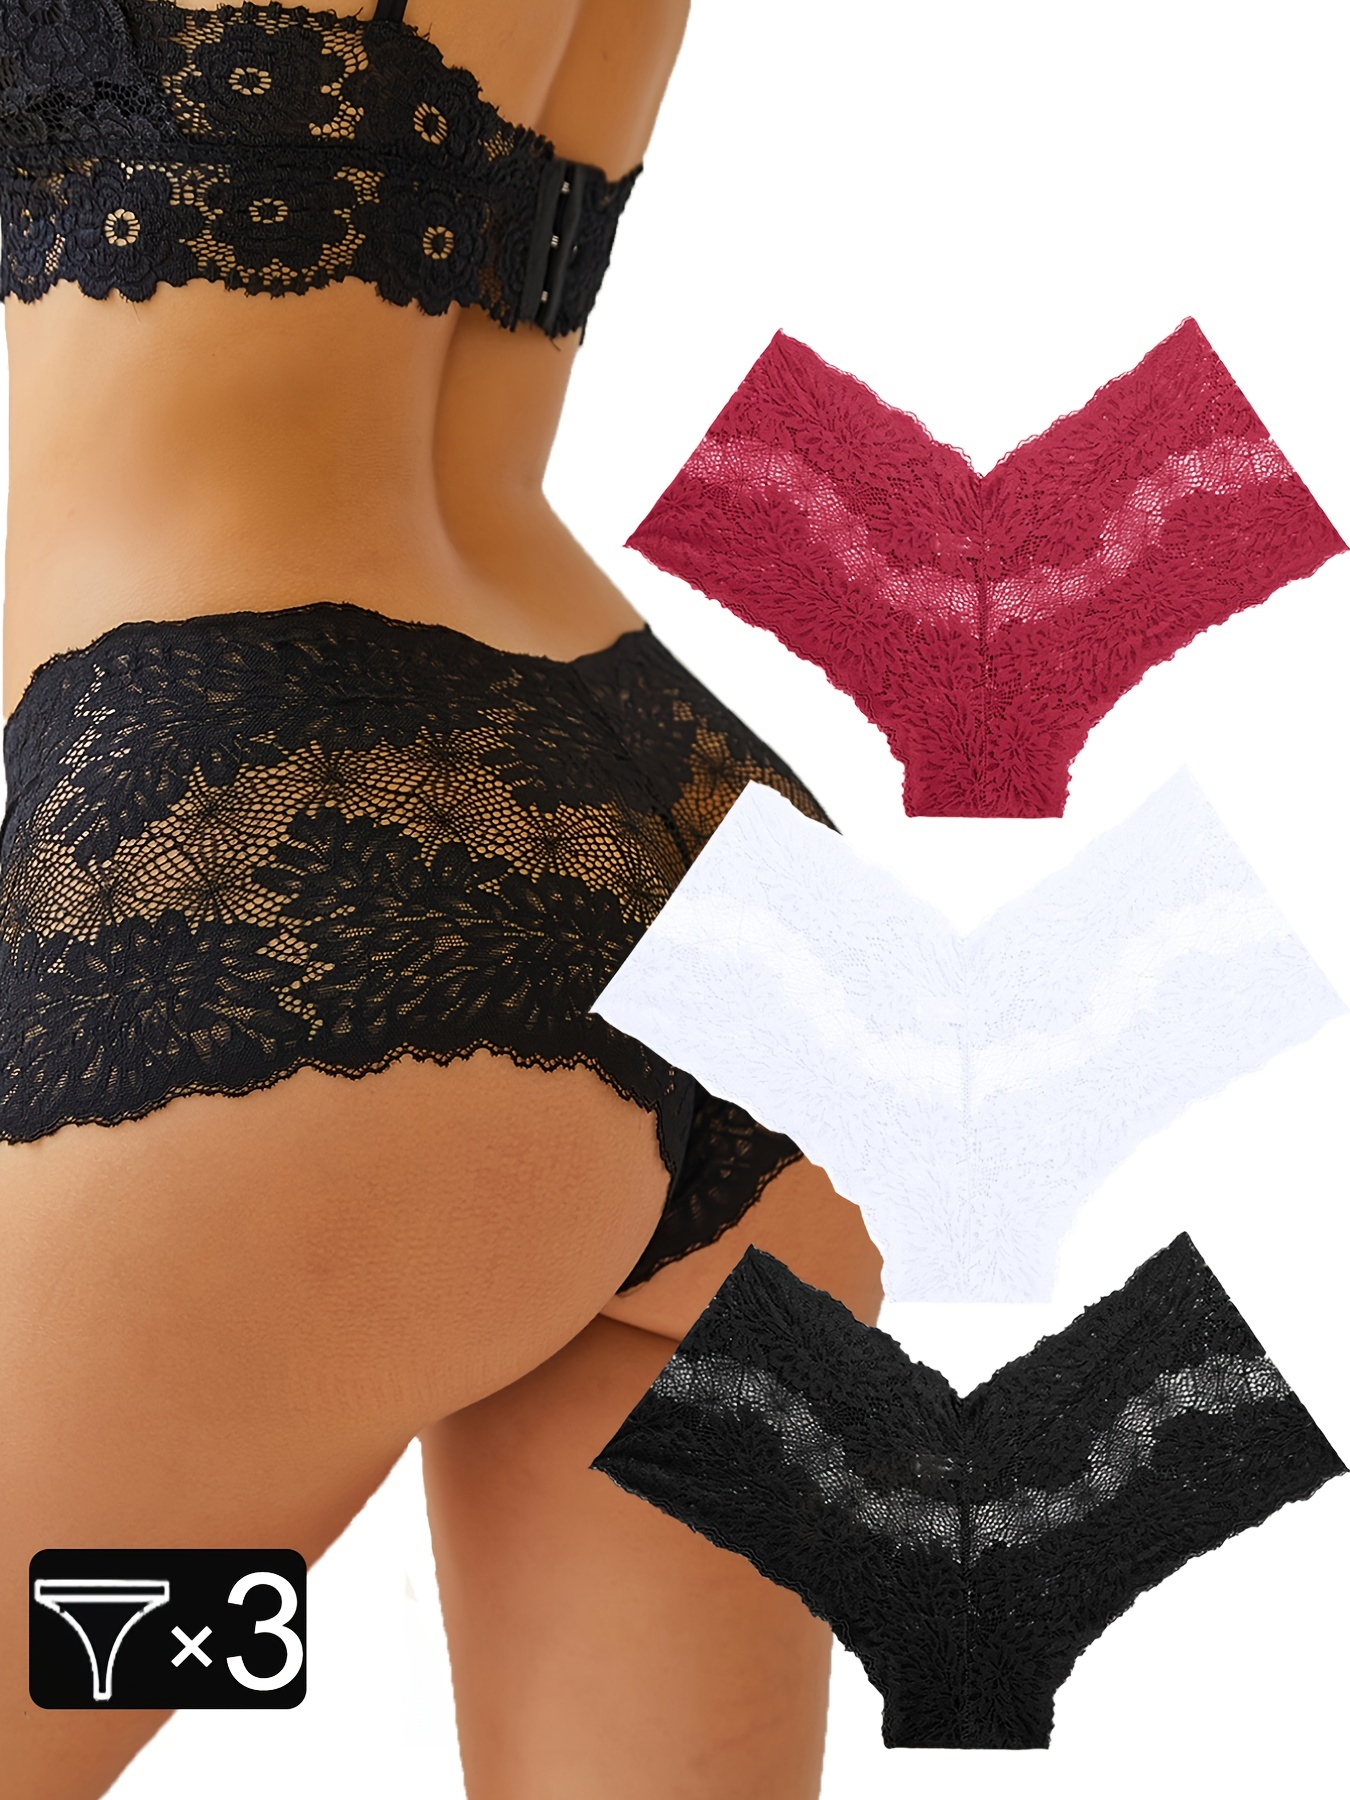 3pcs Floral Lace Boyshort Panties, Sexy Semi-sheer Intimates Panties,  Women's Lingerie & Underwear